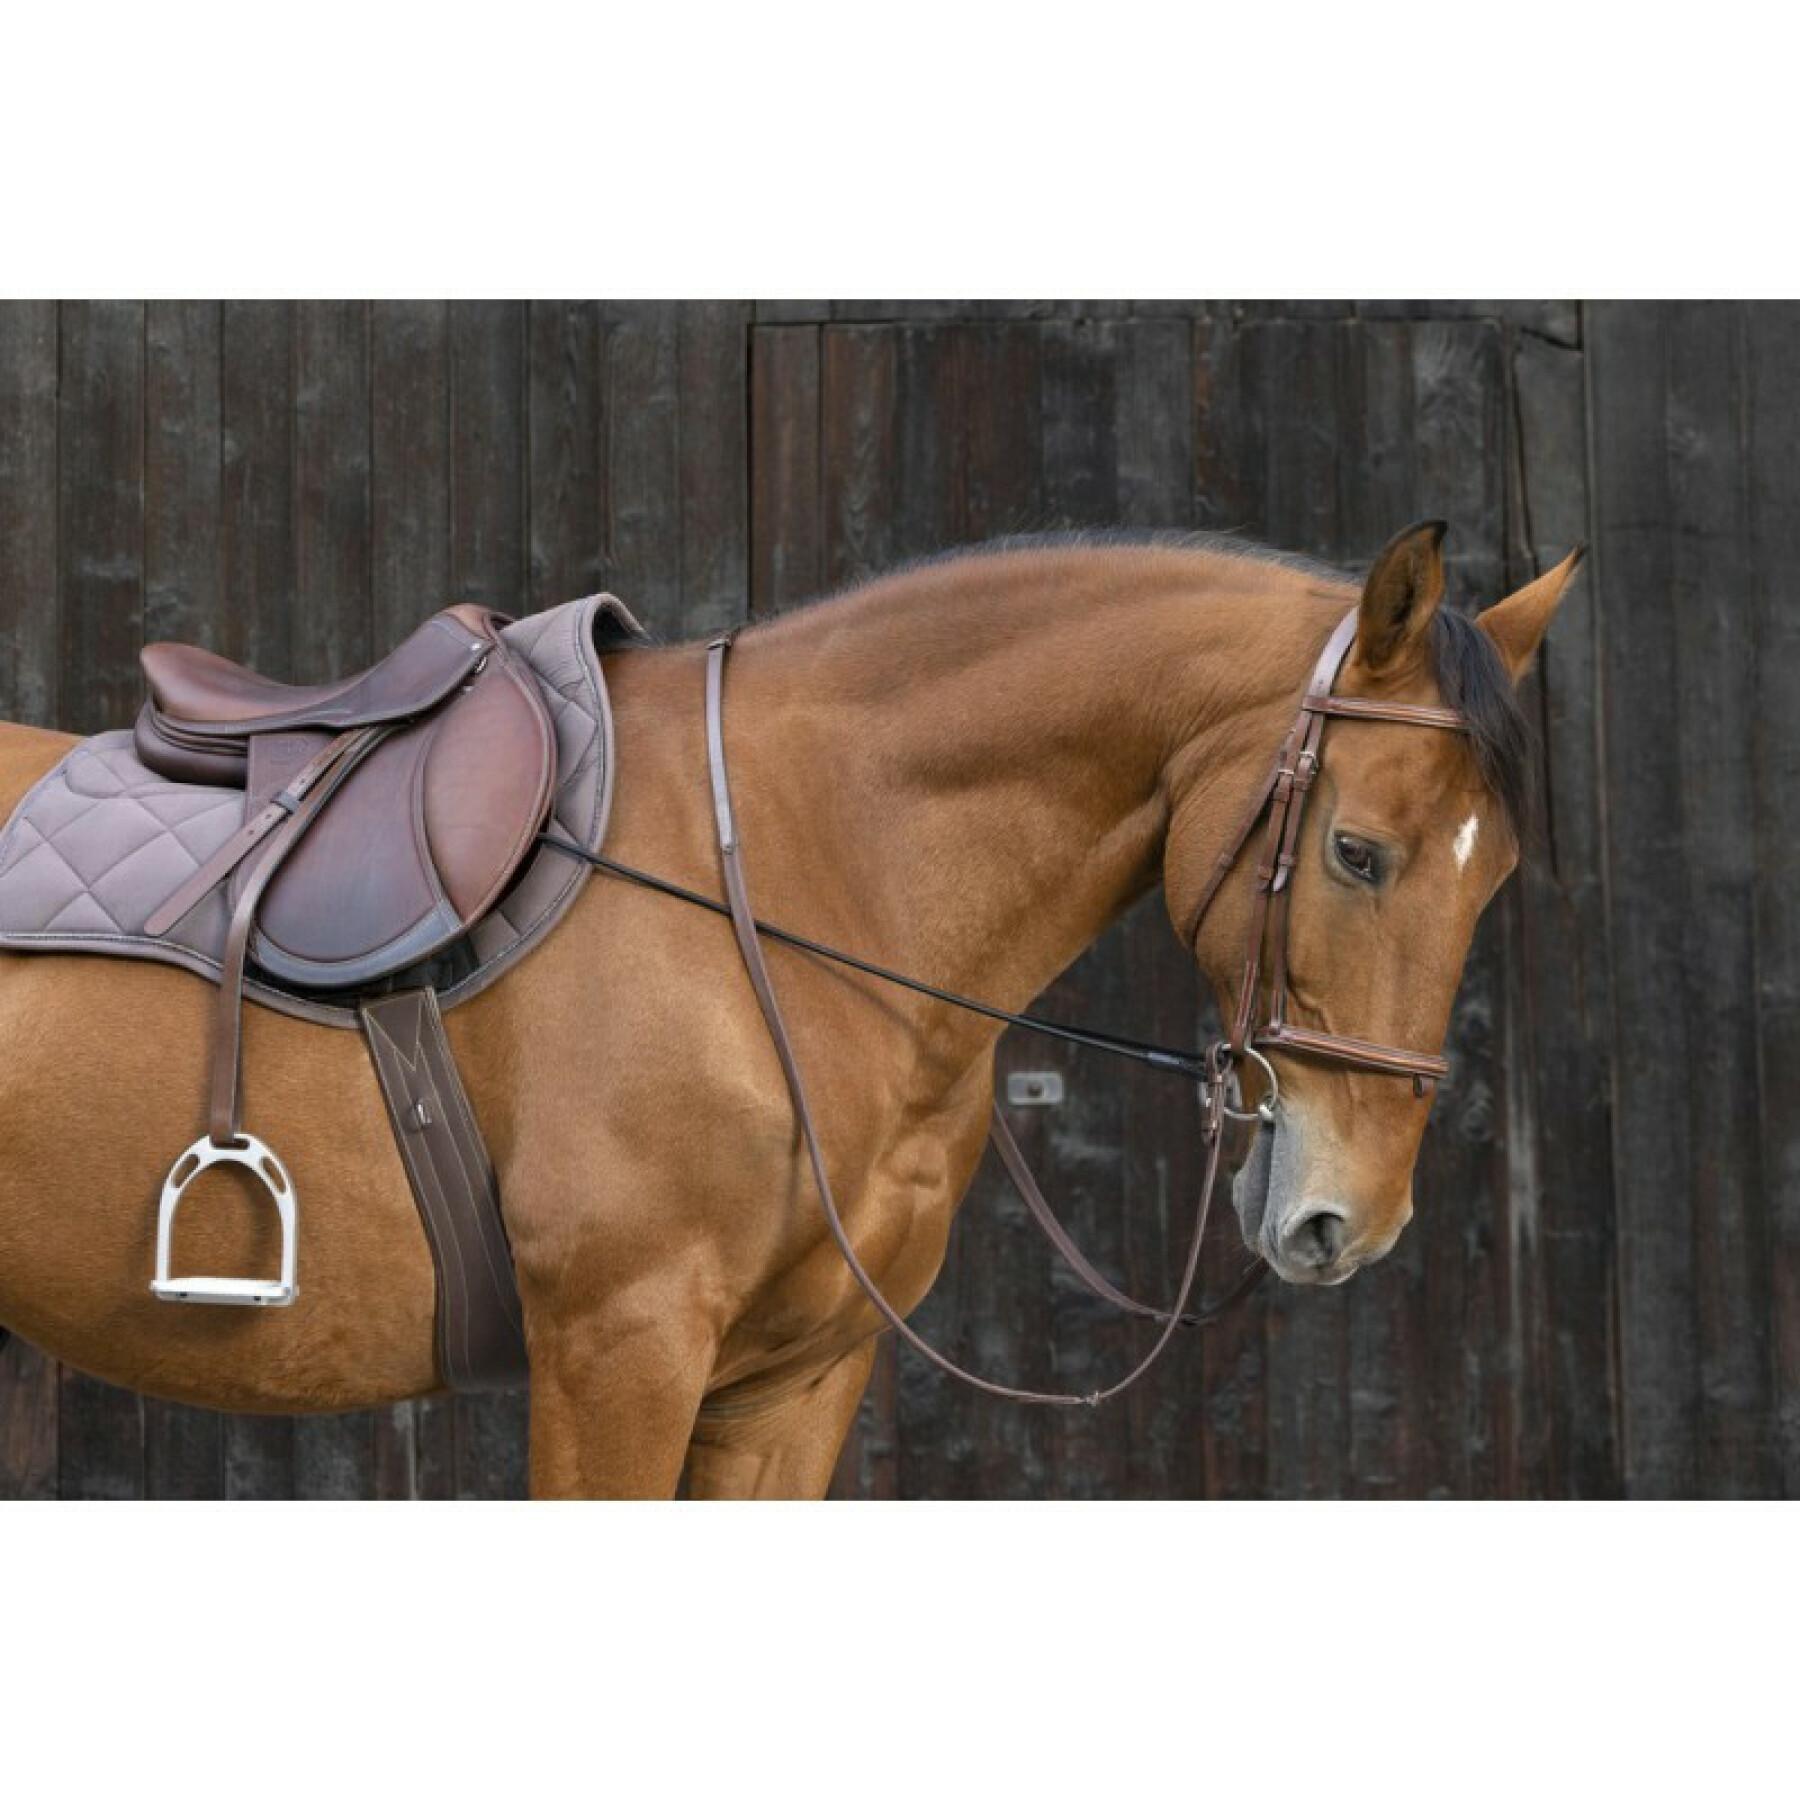 Adjustable elastic horse reins Norton